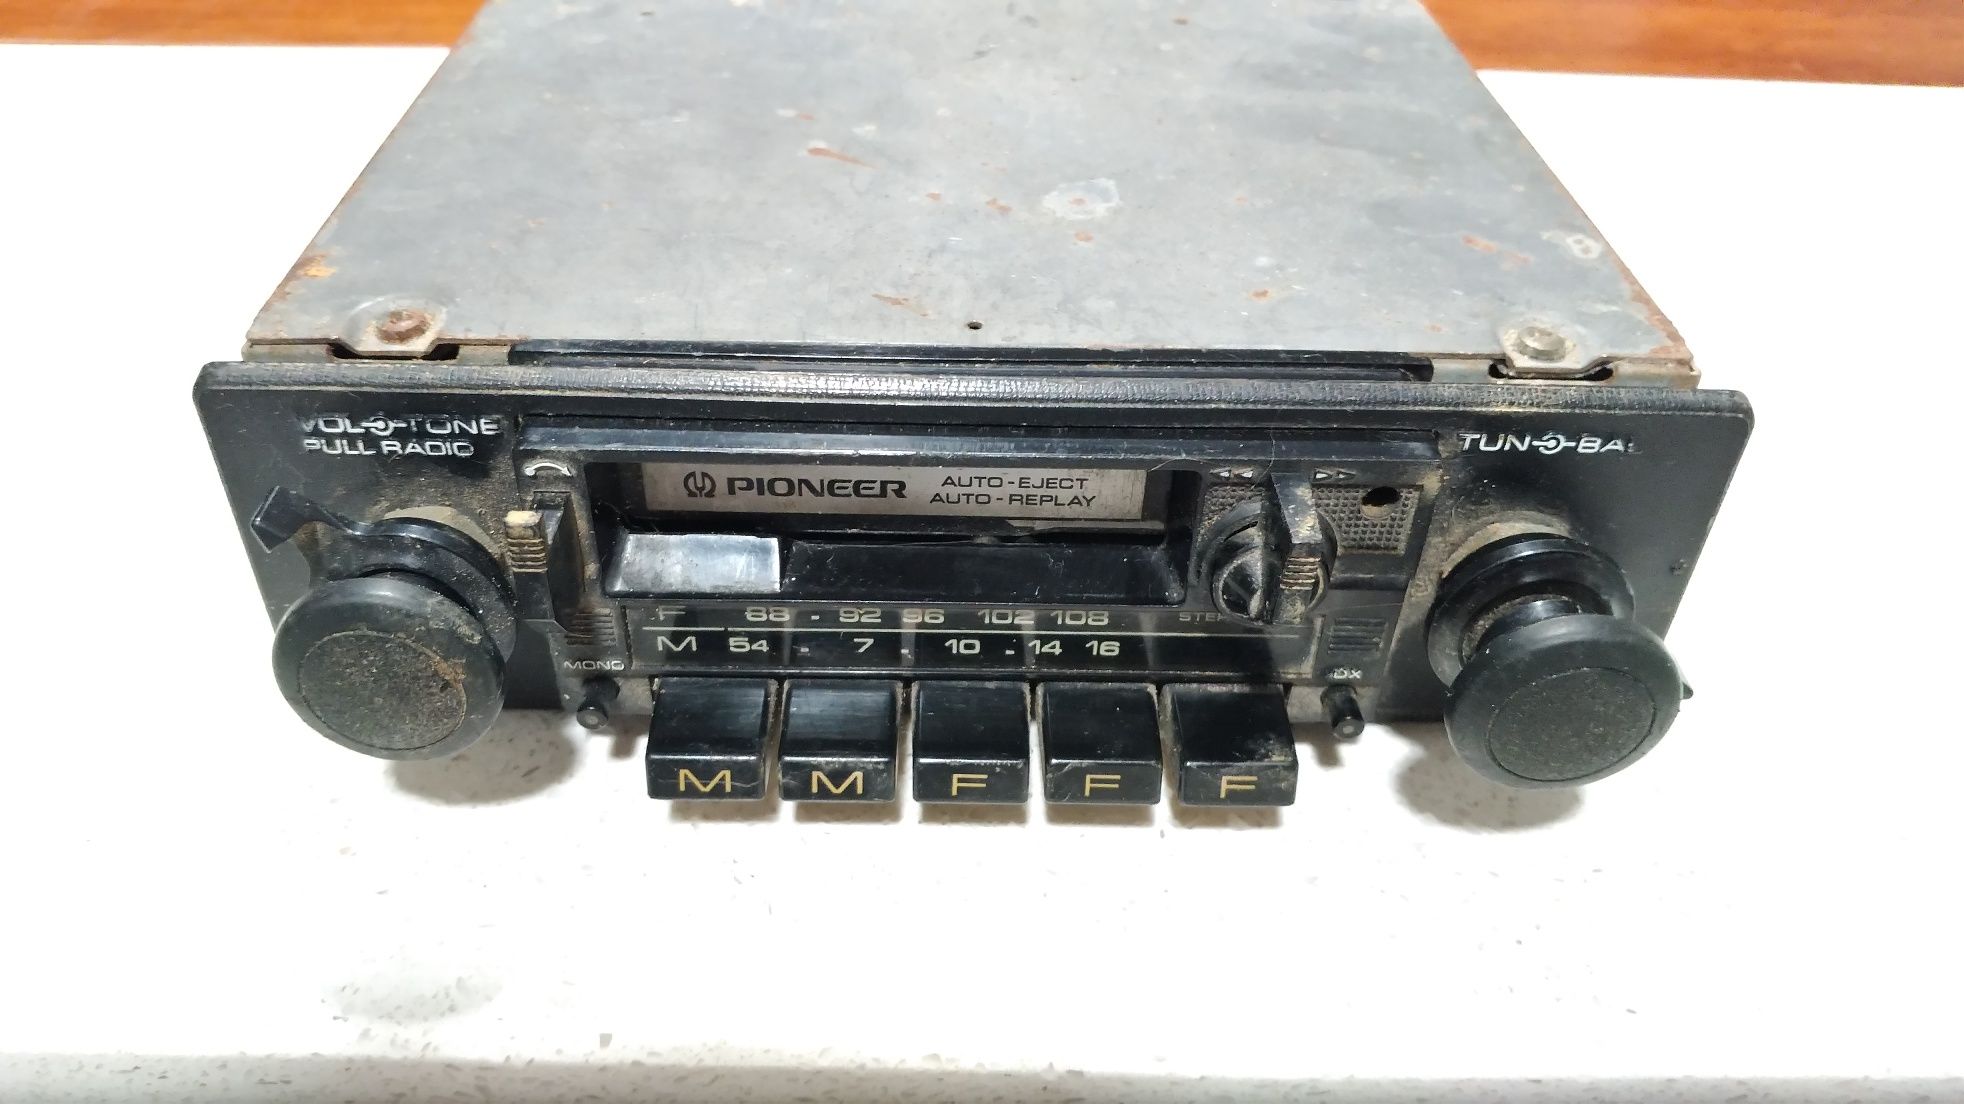 Auto radio Pioneer KP6000 aparelhagem clássico sony